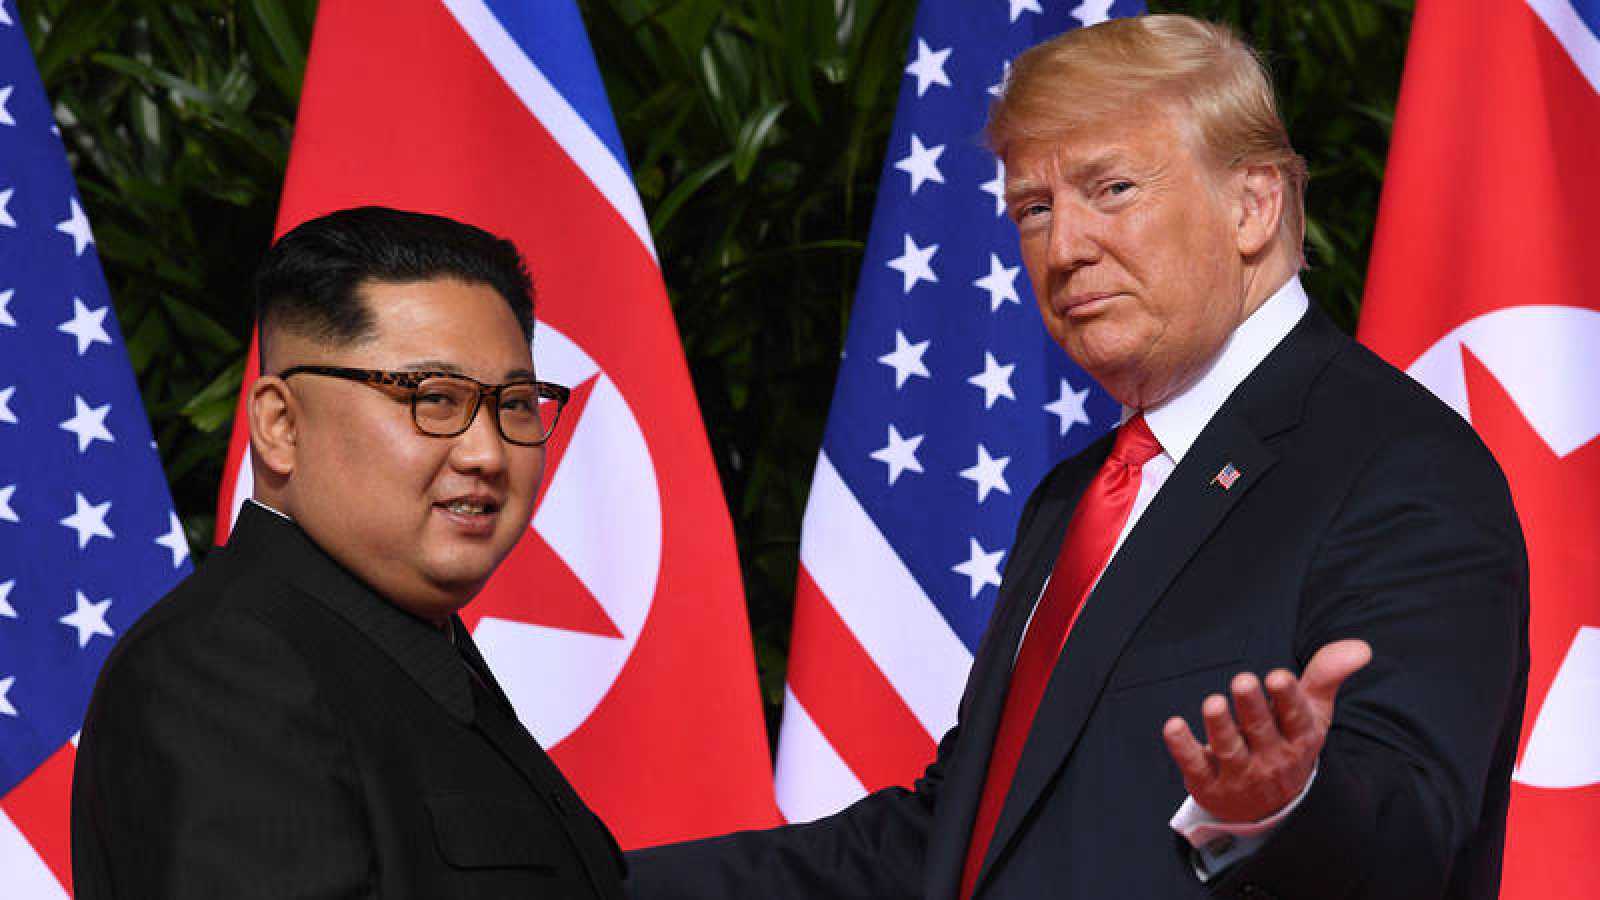 Kim Jong-un “tiene mucho que perder, si actúa de manera hostil”, advierte Trump